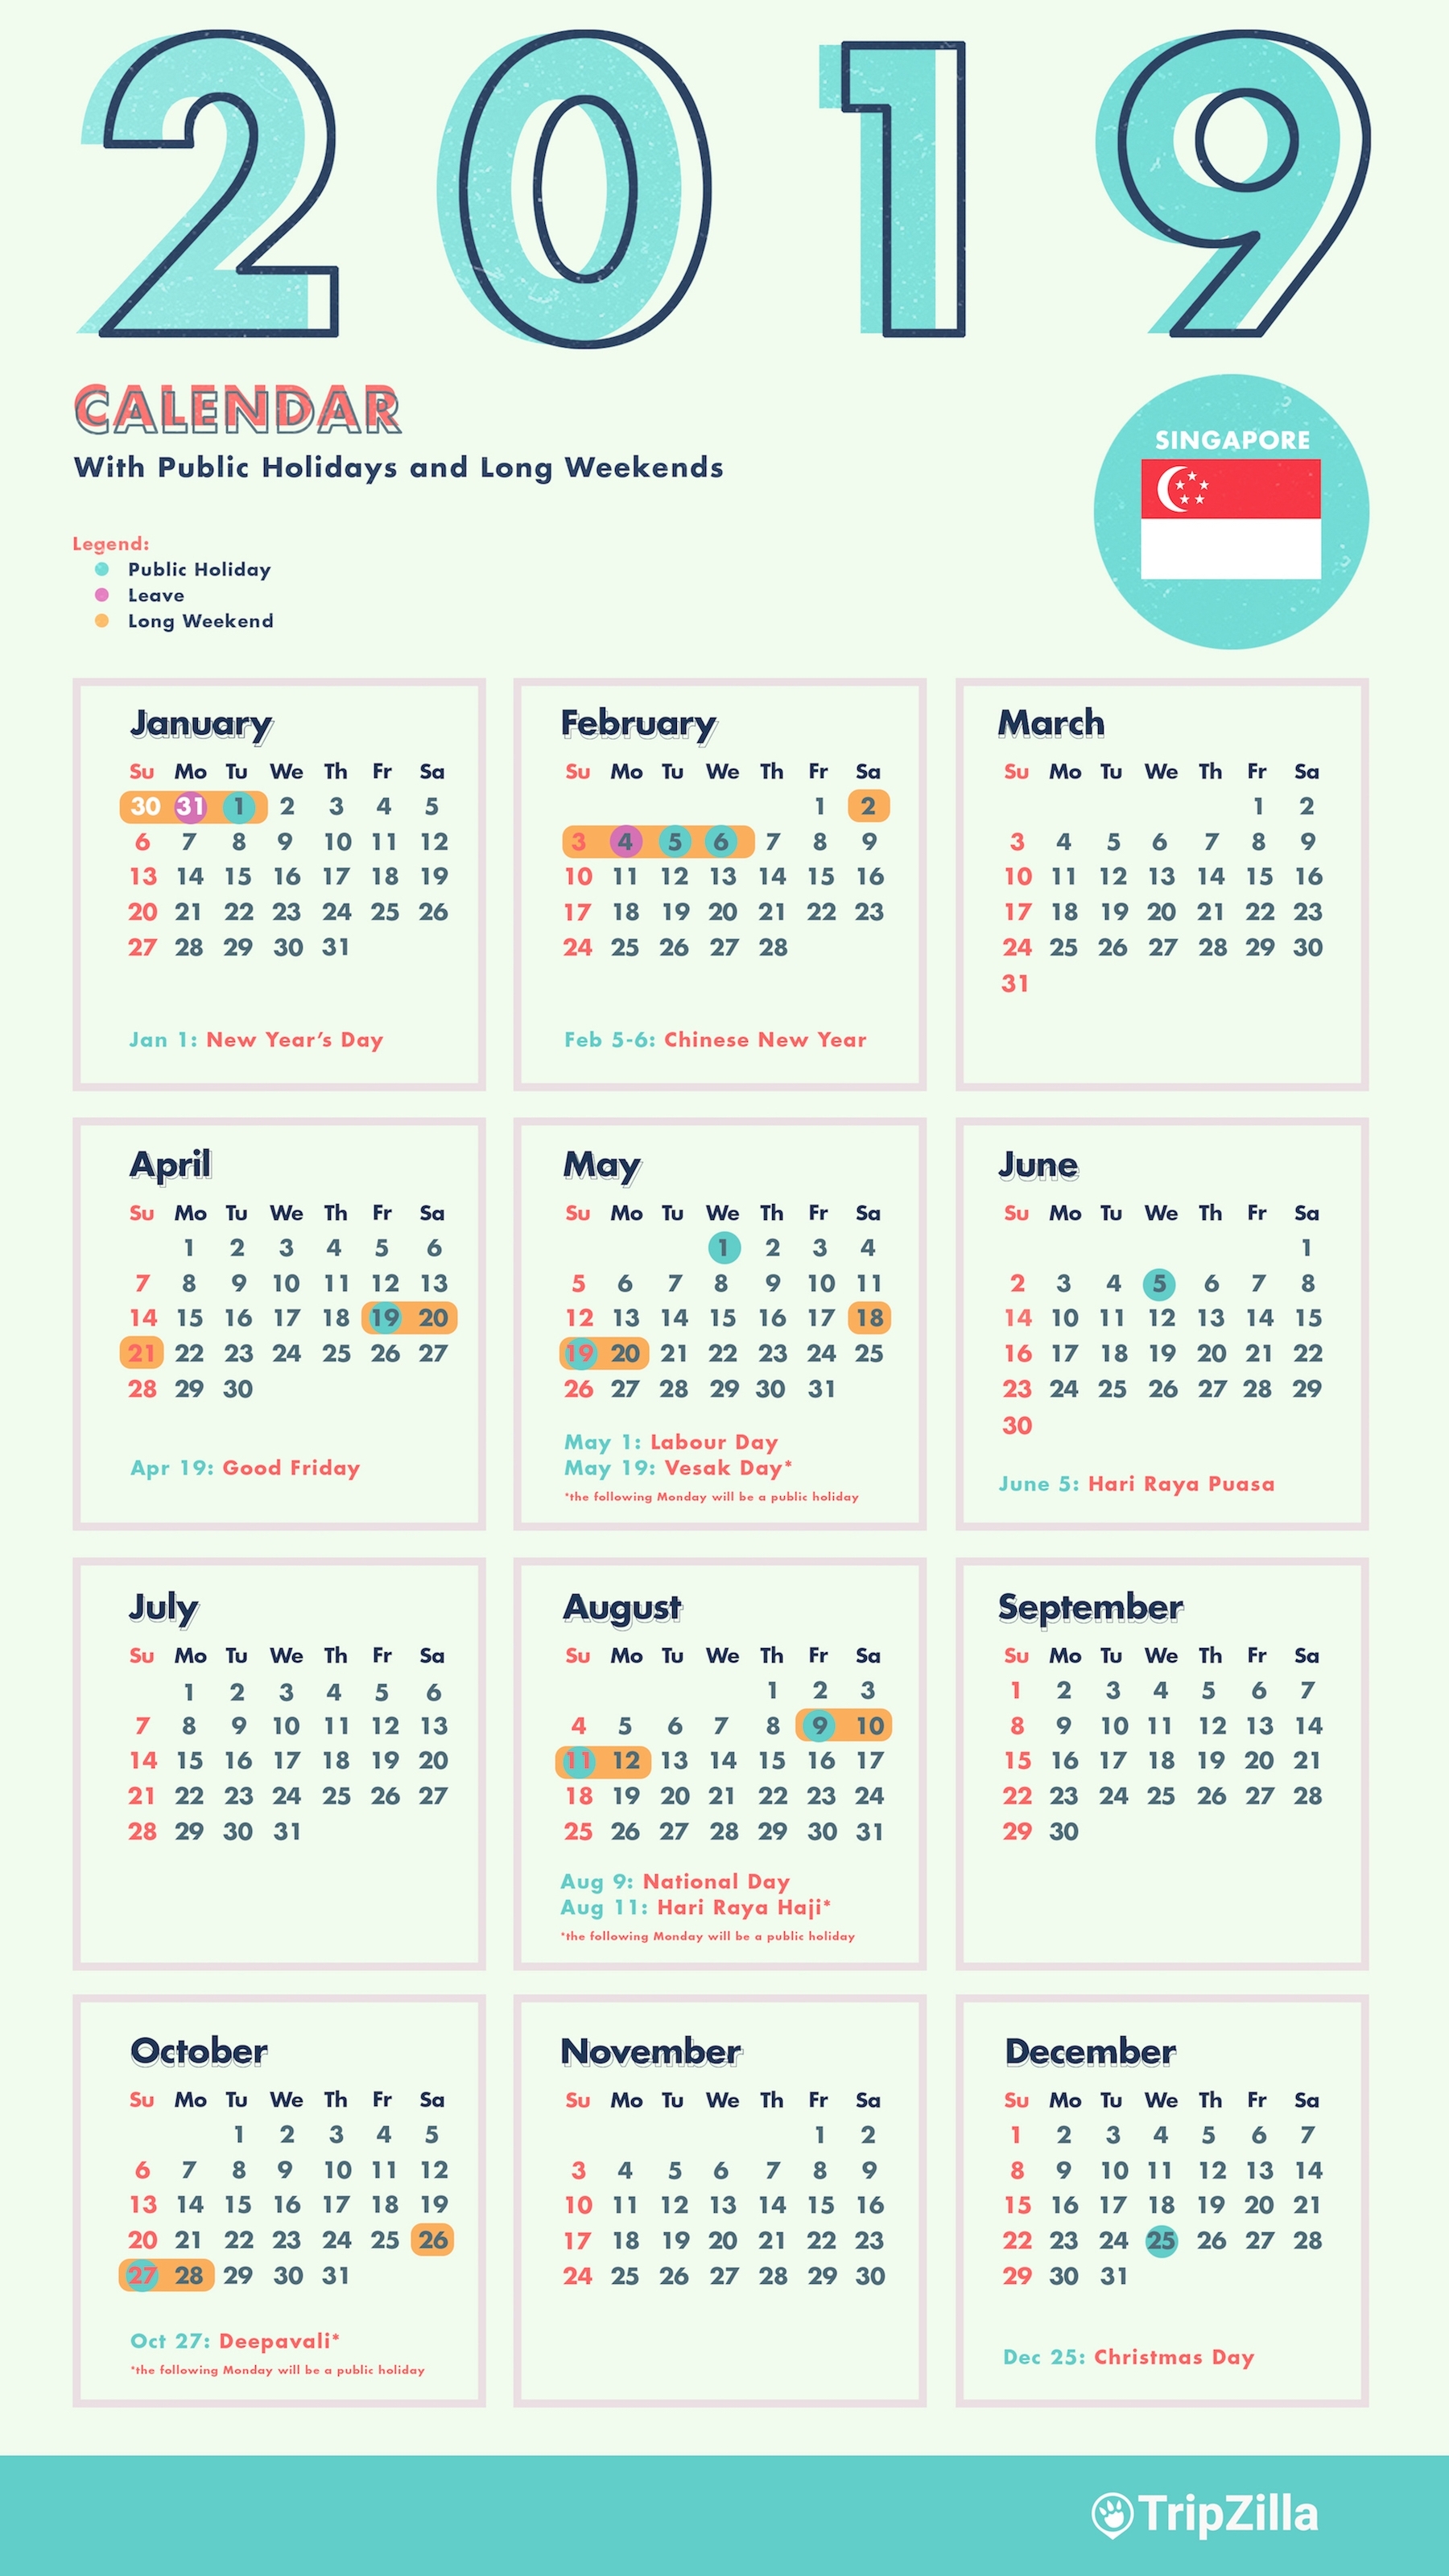 6 Long Weekends In Singapore In 2019 (Bonus Calendar &amp; Cheatsheet) for National Days Of The Month June